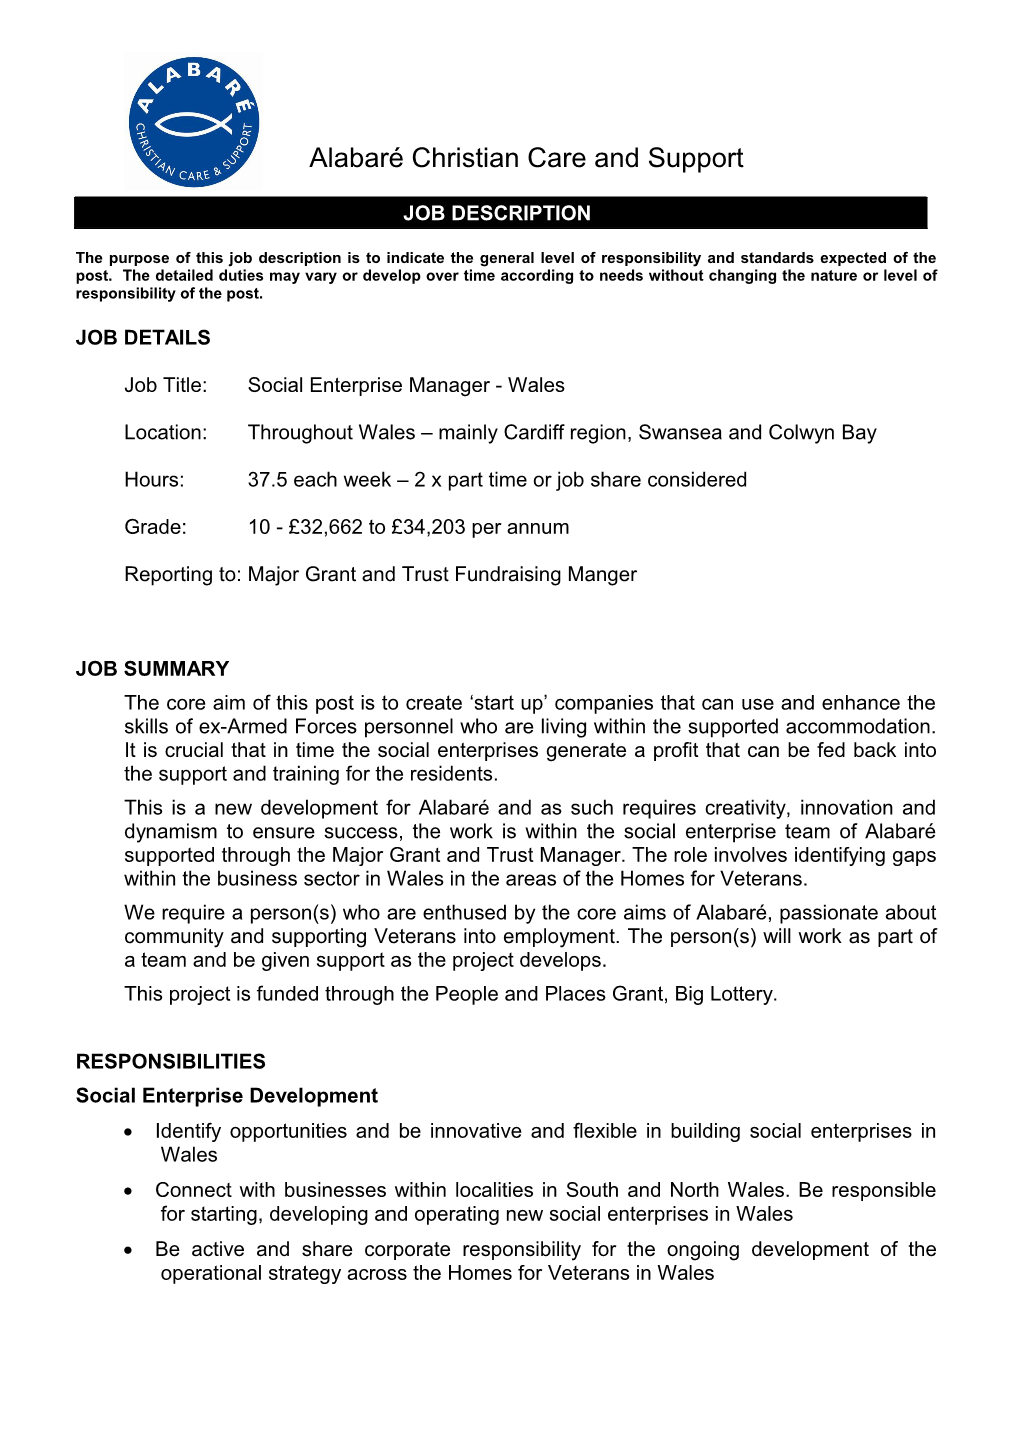 Job Title:Social Enterprise Manager - Wales